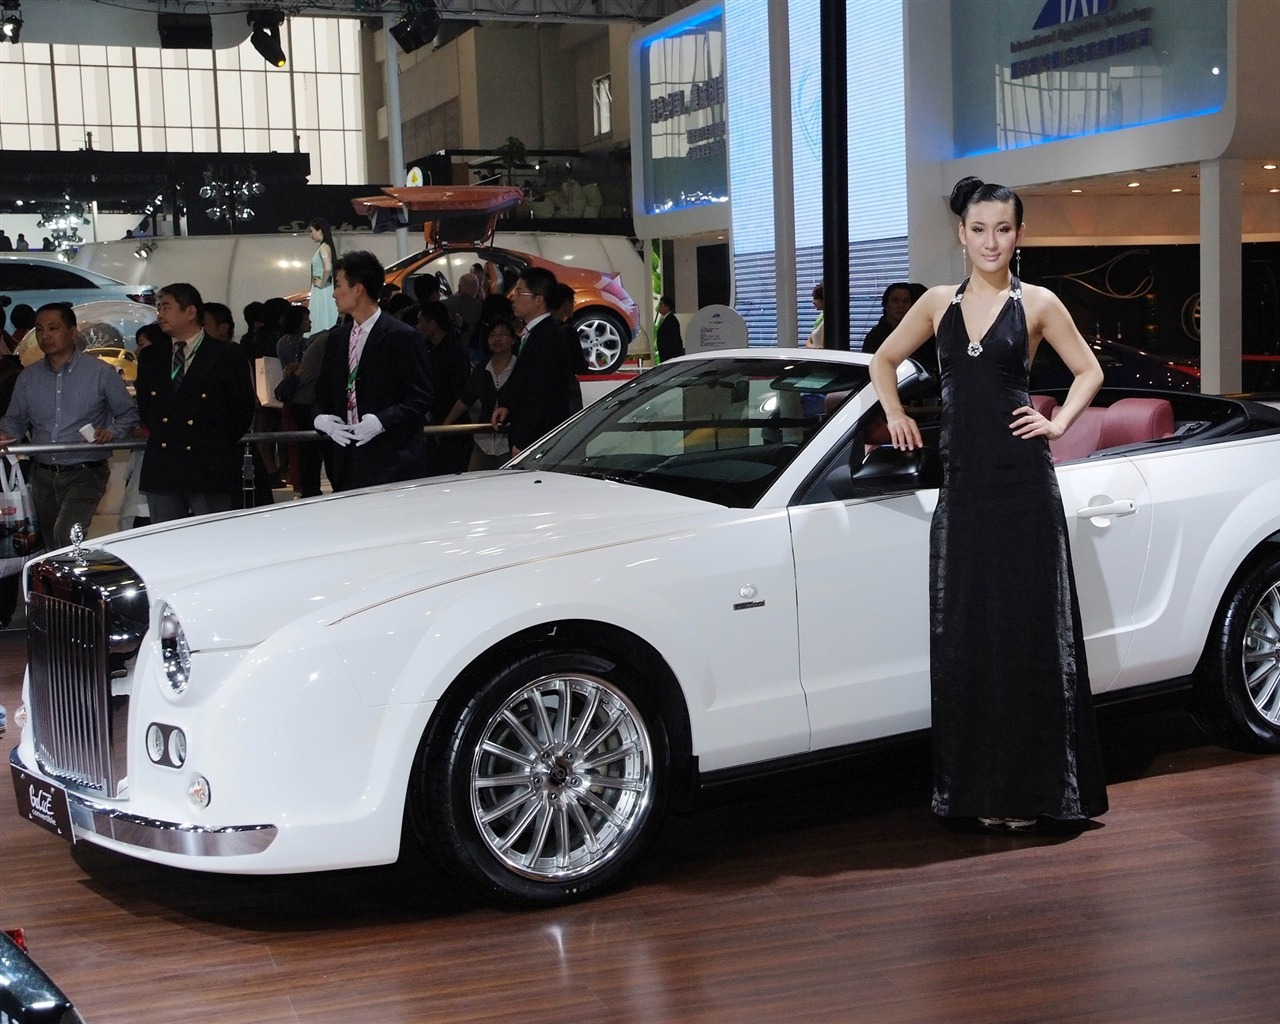 2010 Salón Internacional del Automóvil de Beijing Heung Che belleza (obras barras de refuerzo) #12 - 1280x1024